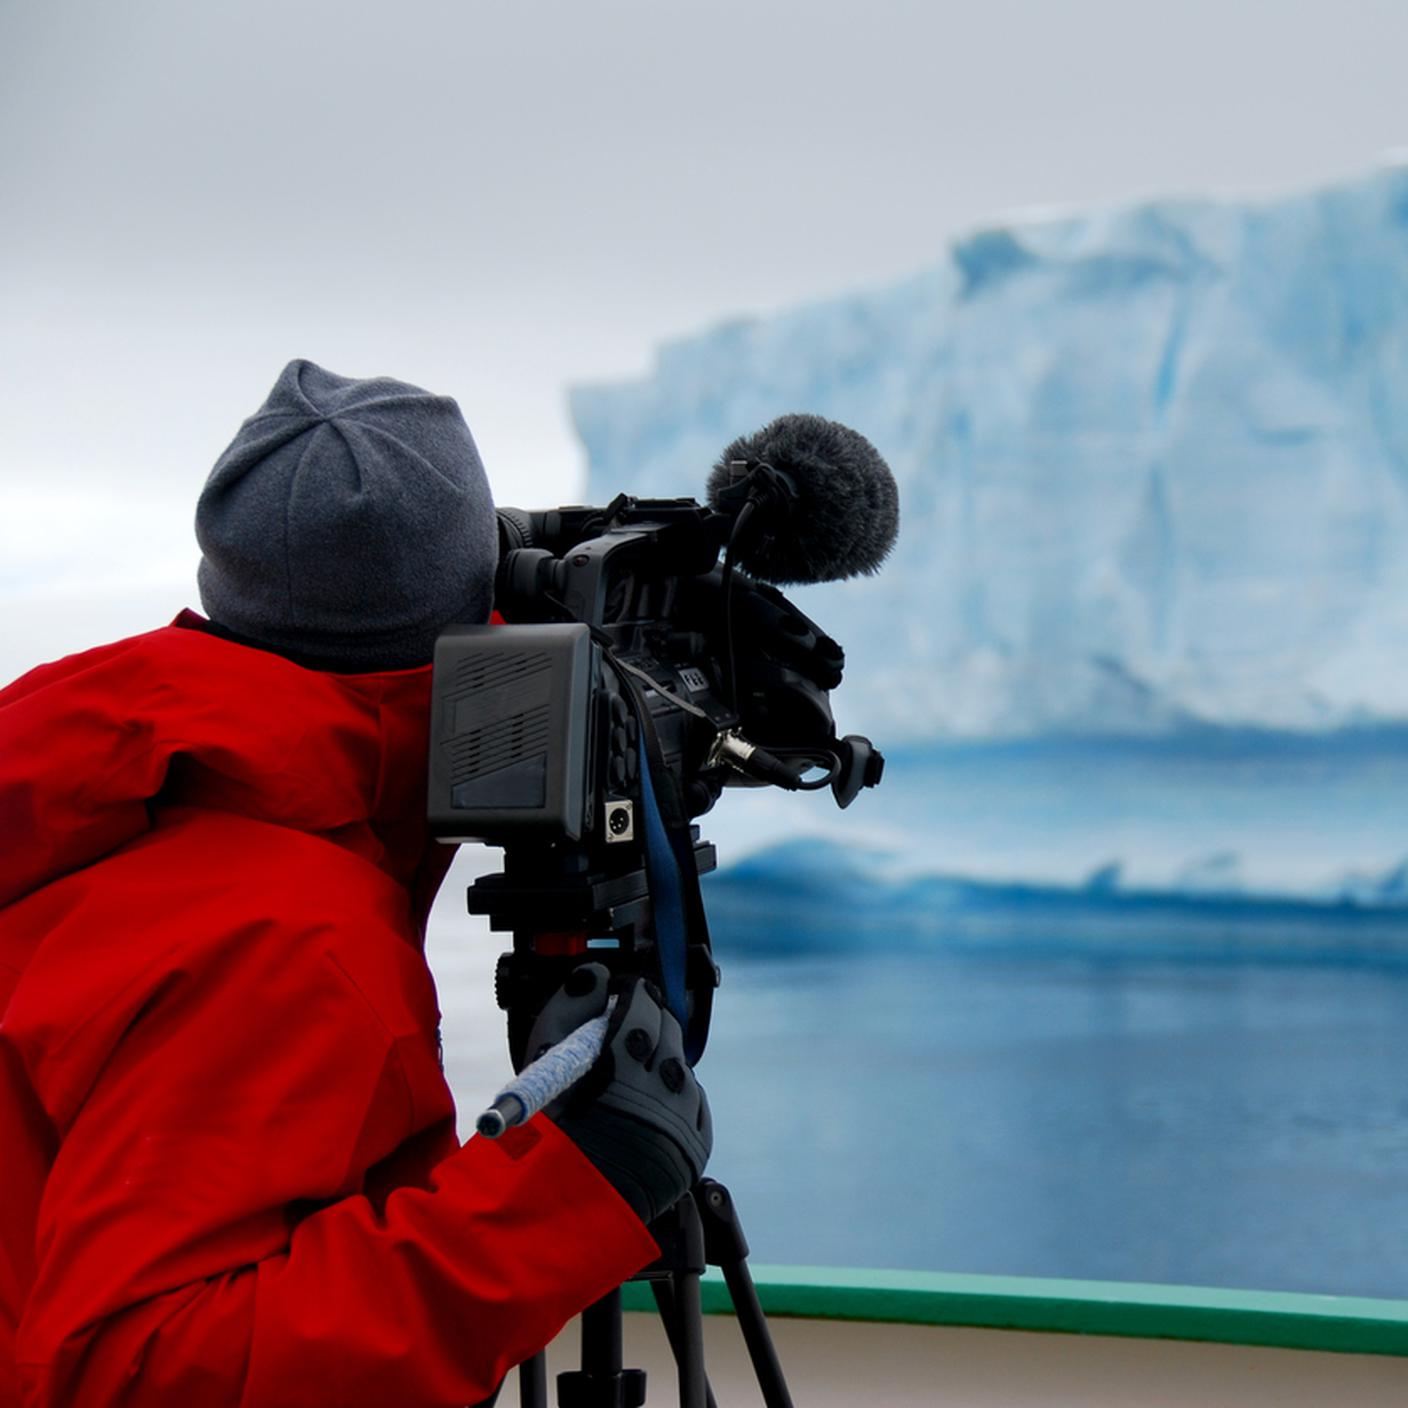 Documentario, cameraman, riprese di un iceberg, documentario, filmare, avventura, Video